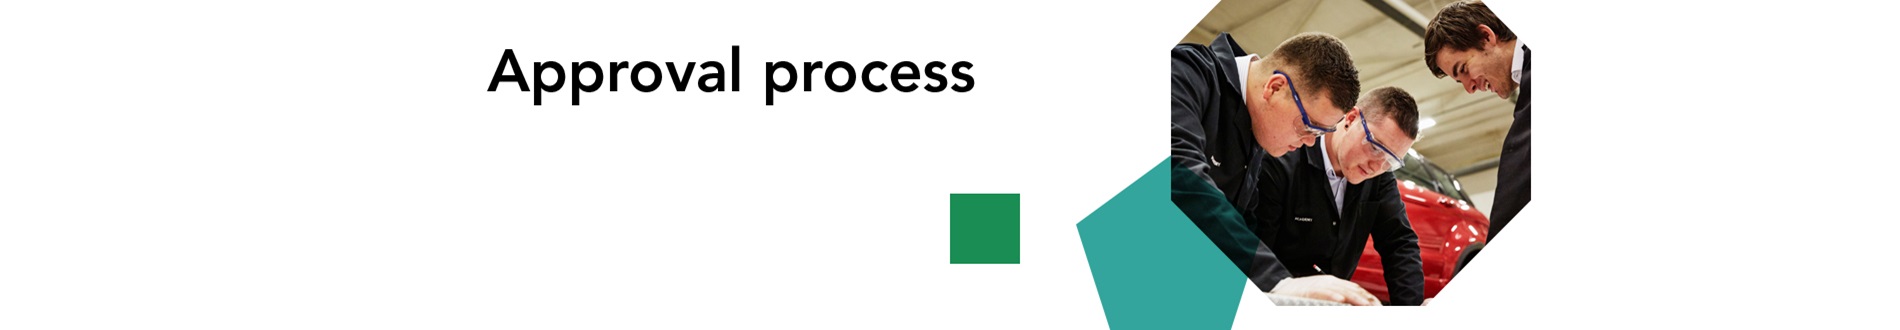 Approval-process-construction jpg